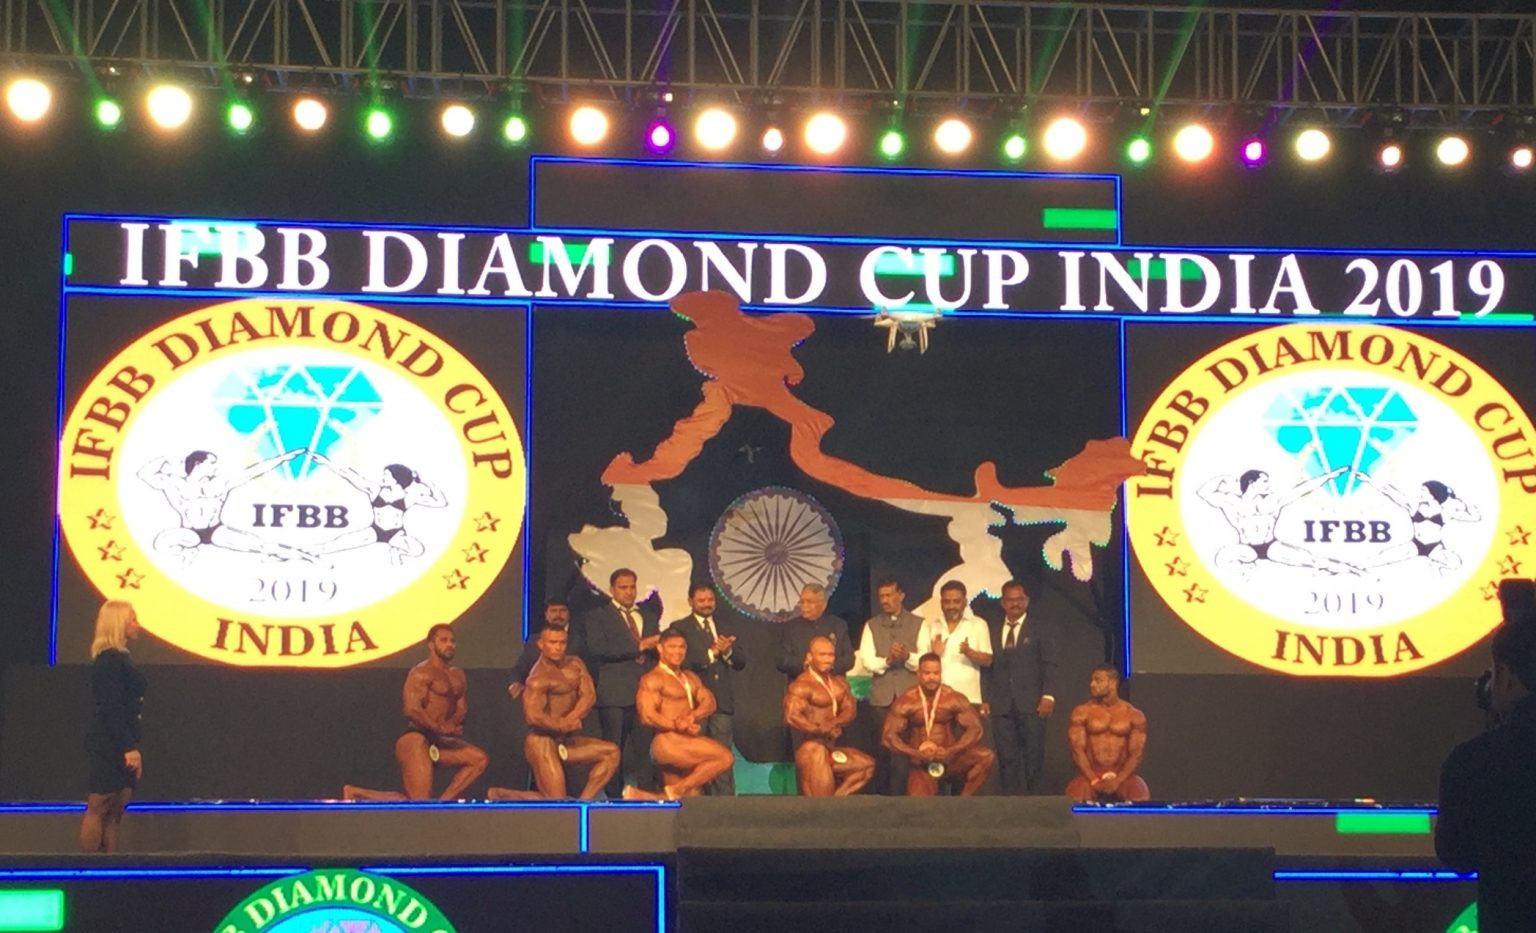 Aurangabad played host to the IFBB Diamond Cup India ©IFBB